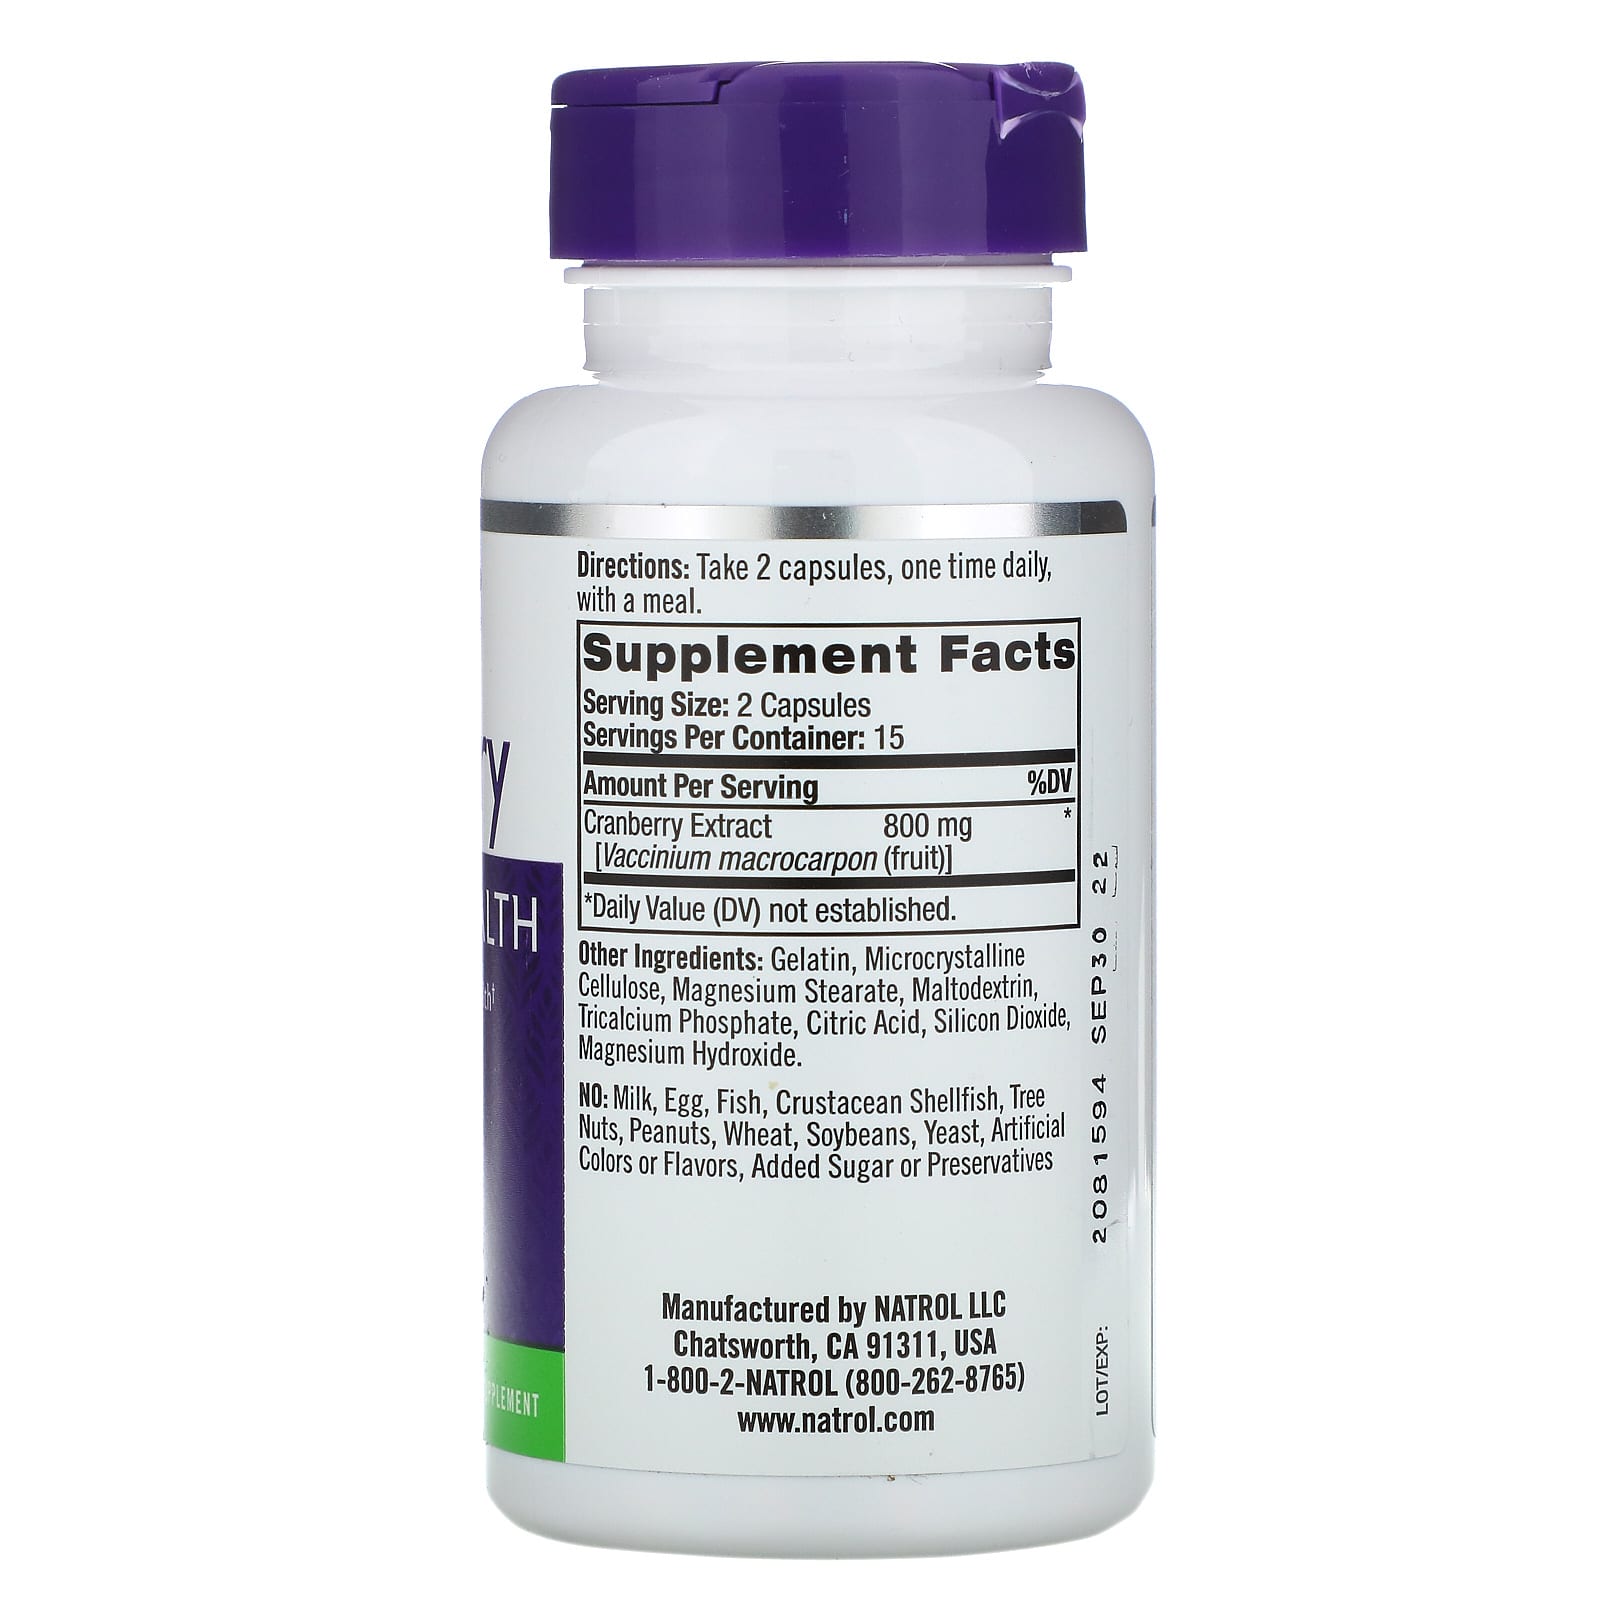 Natrol cranberry 800mg capsules women's health fast dissolve - 30 capsules